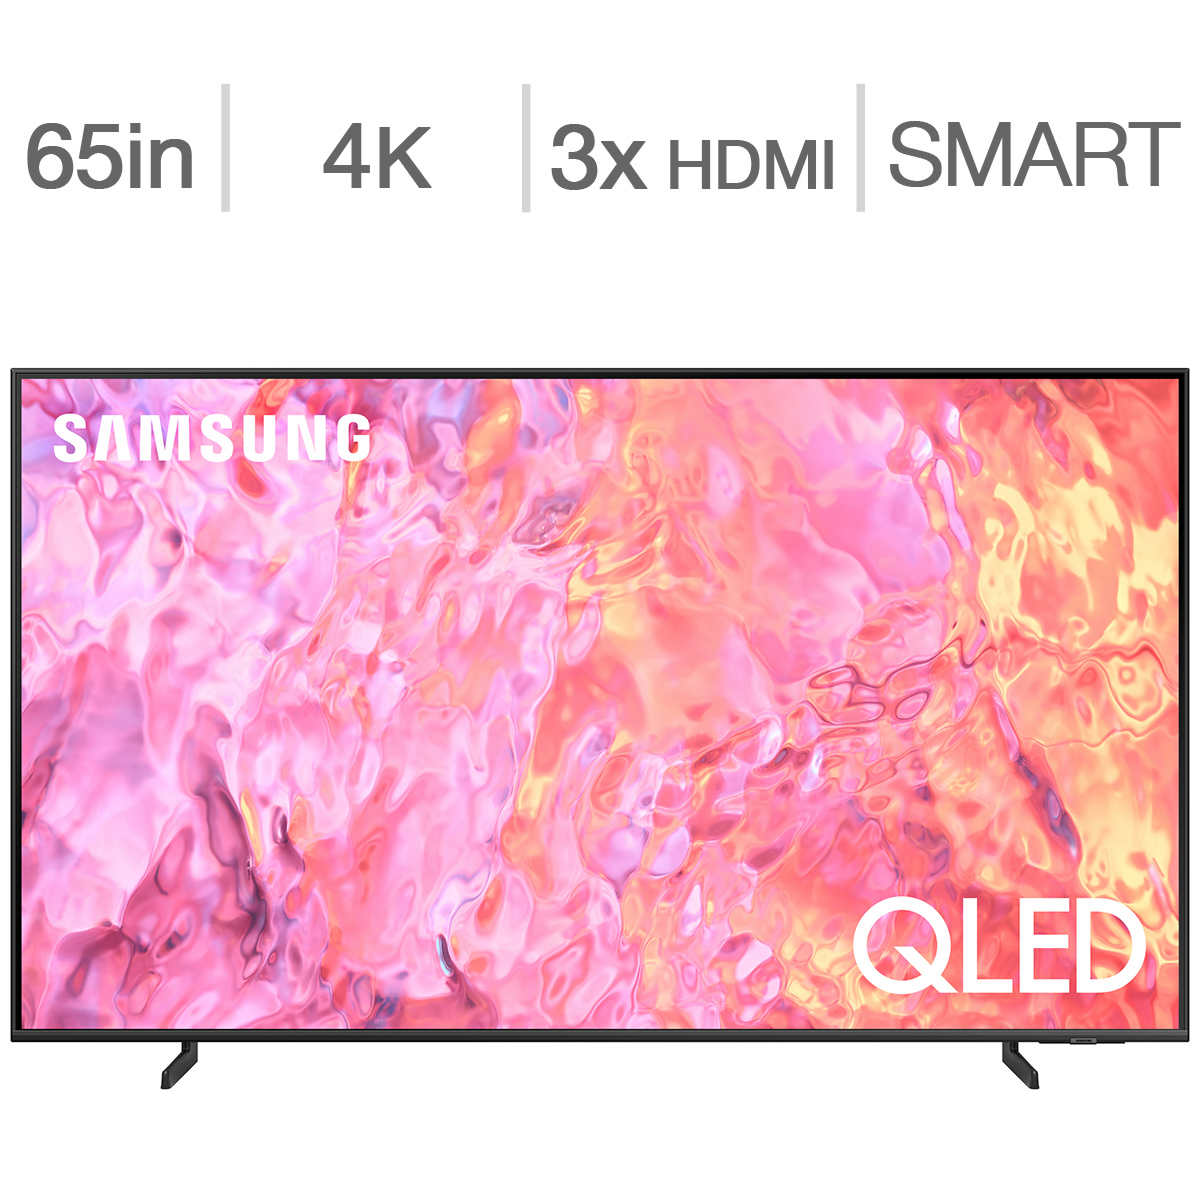 QLED TV Design – Dual LED Ultra Thin Wallpaper TVs